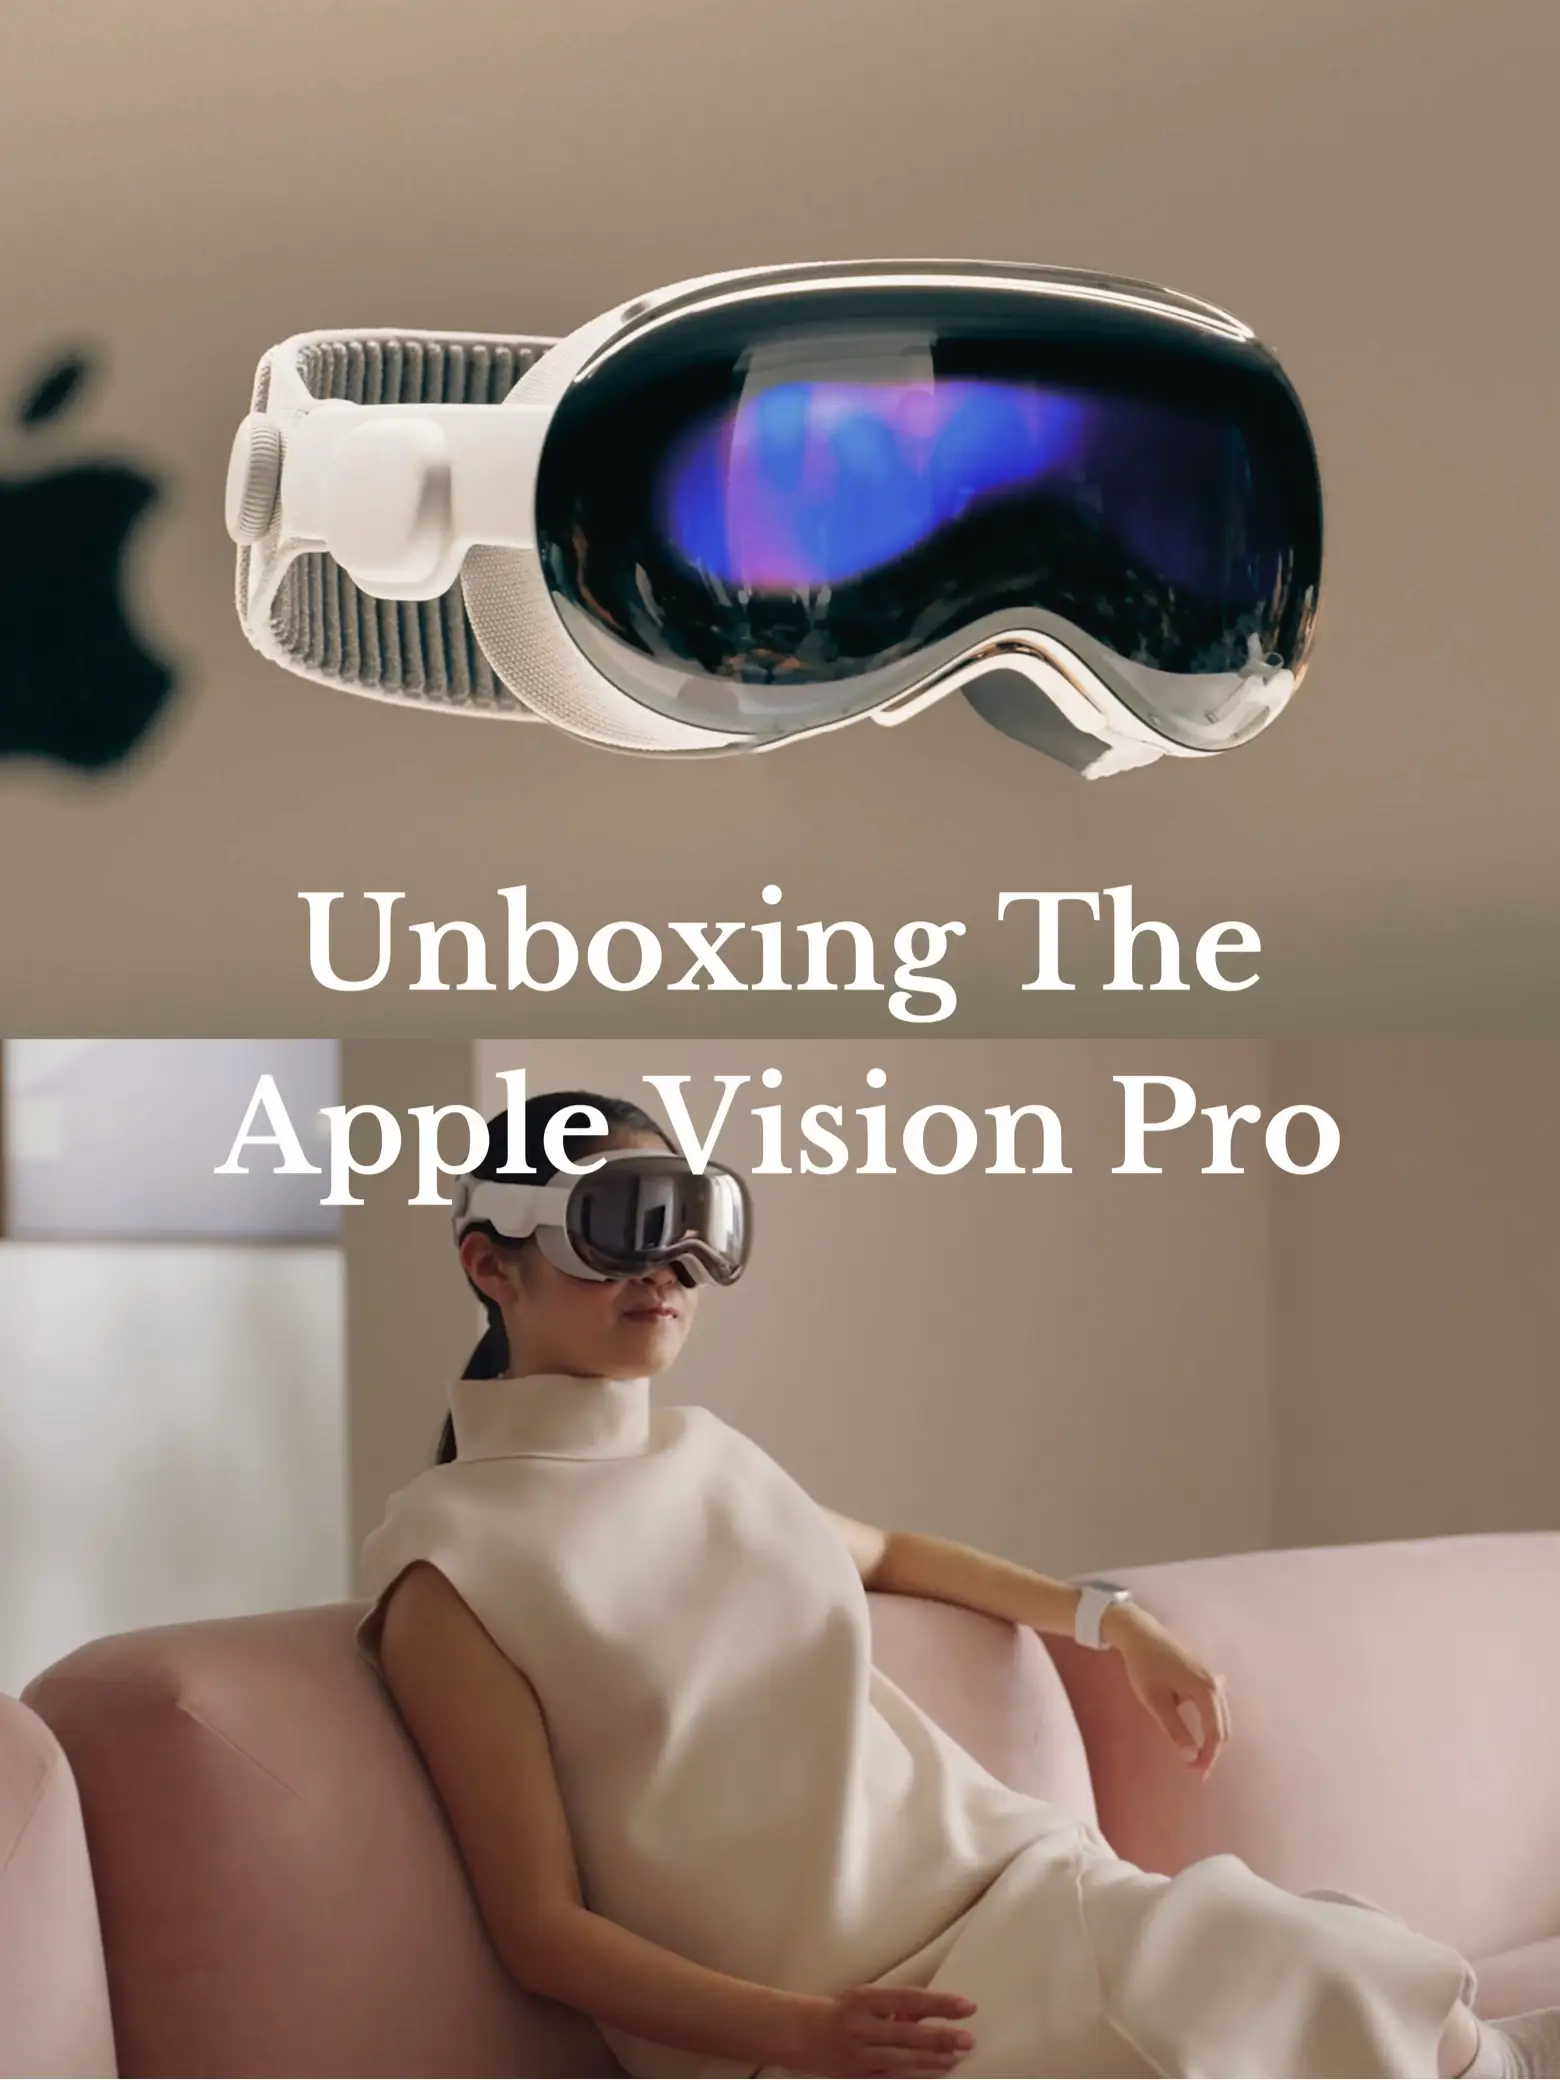 Apple Vision Pro: Apple Vision Pro: social media gets a taste of forbidden  fruit - The Economic Times